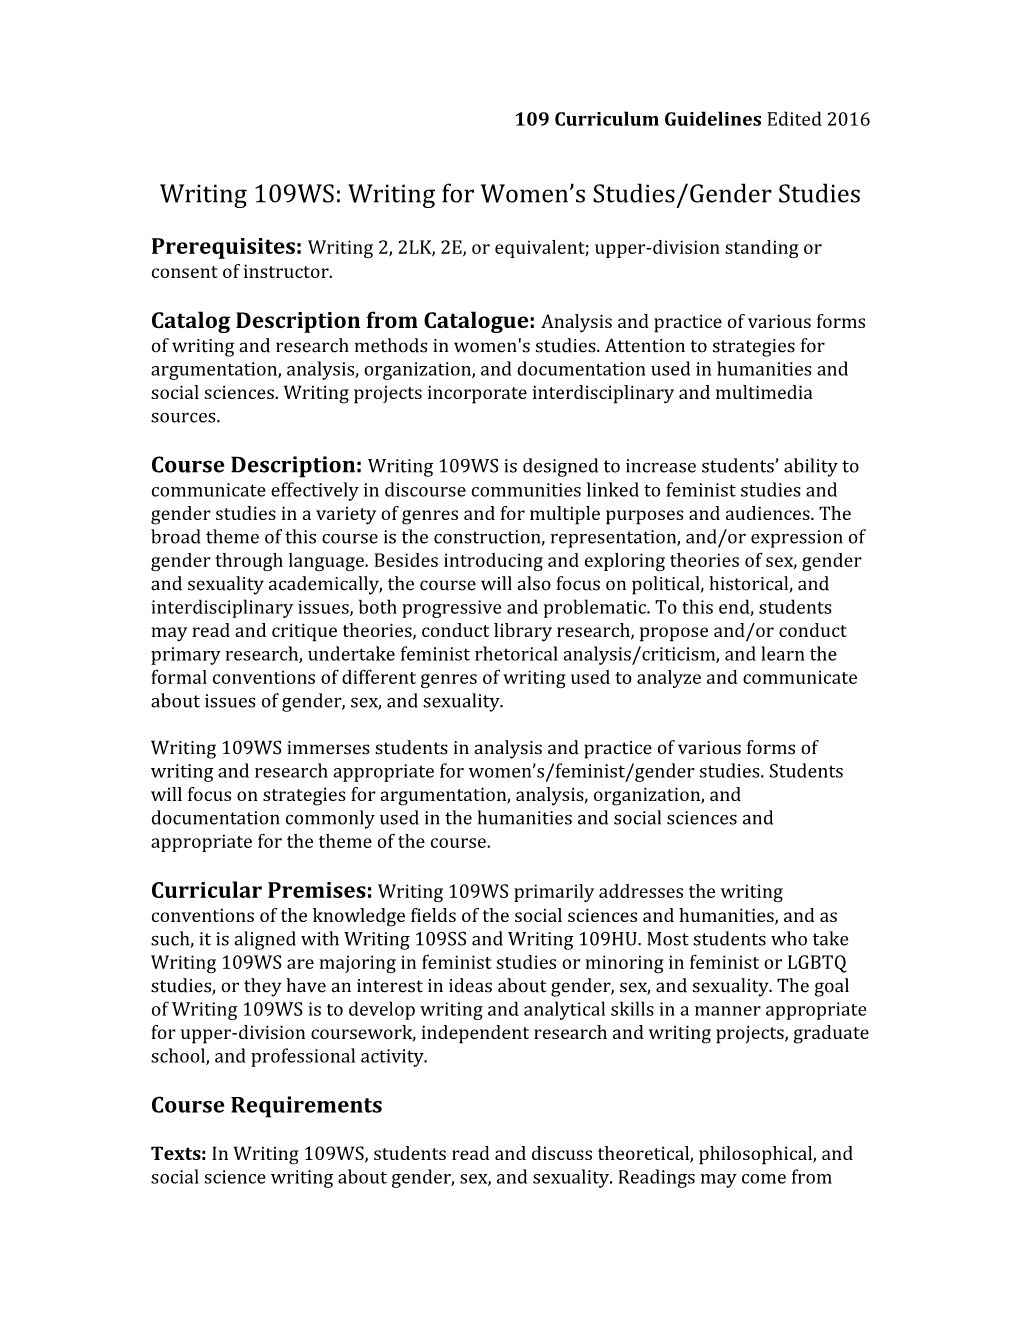 Writing 109WS: Writing for Women S Studies/Gender Studies